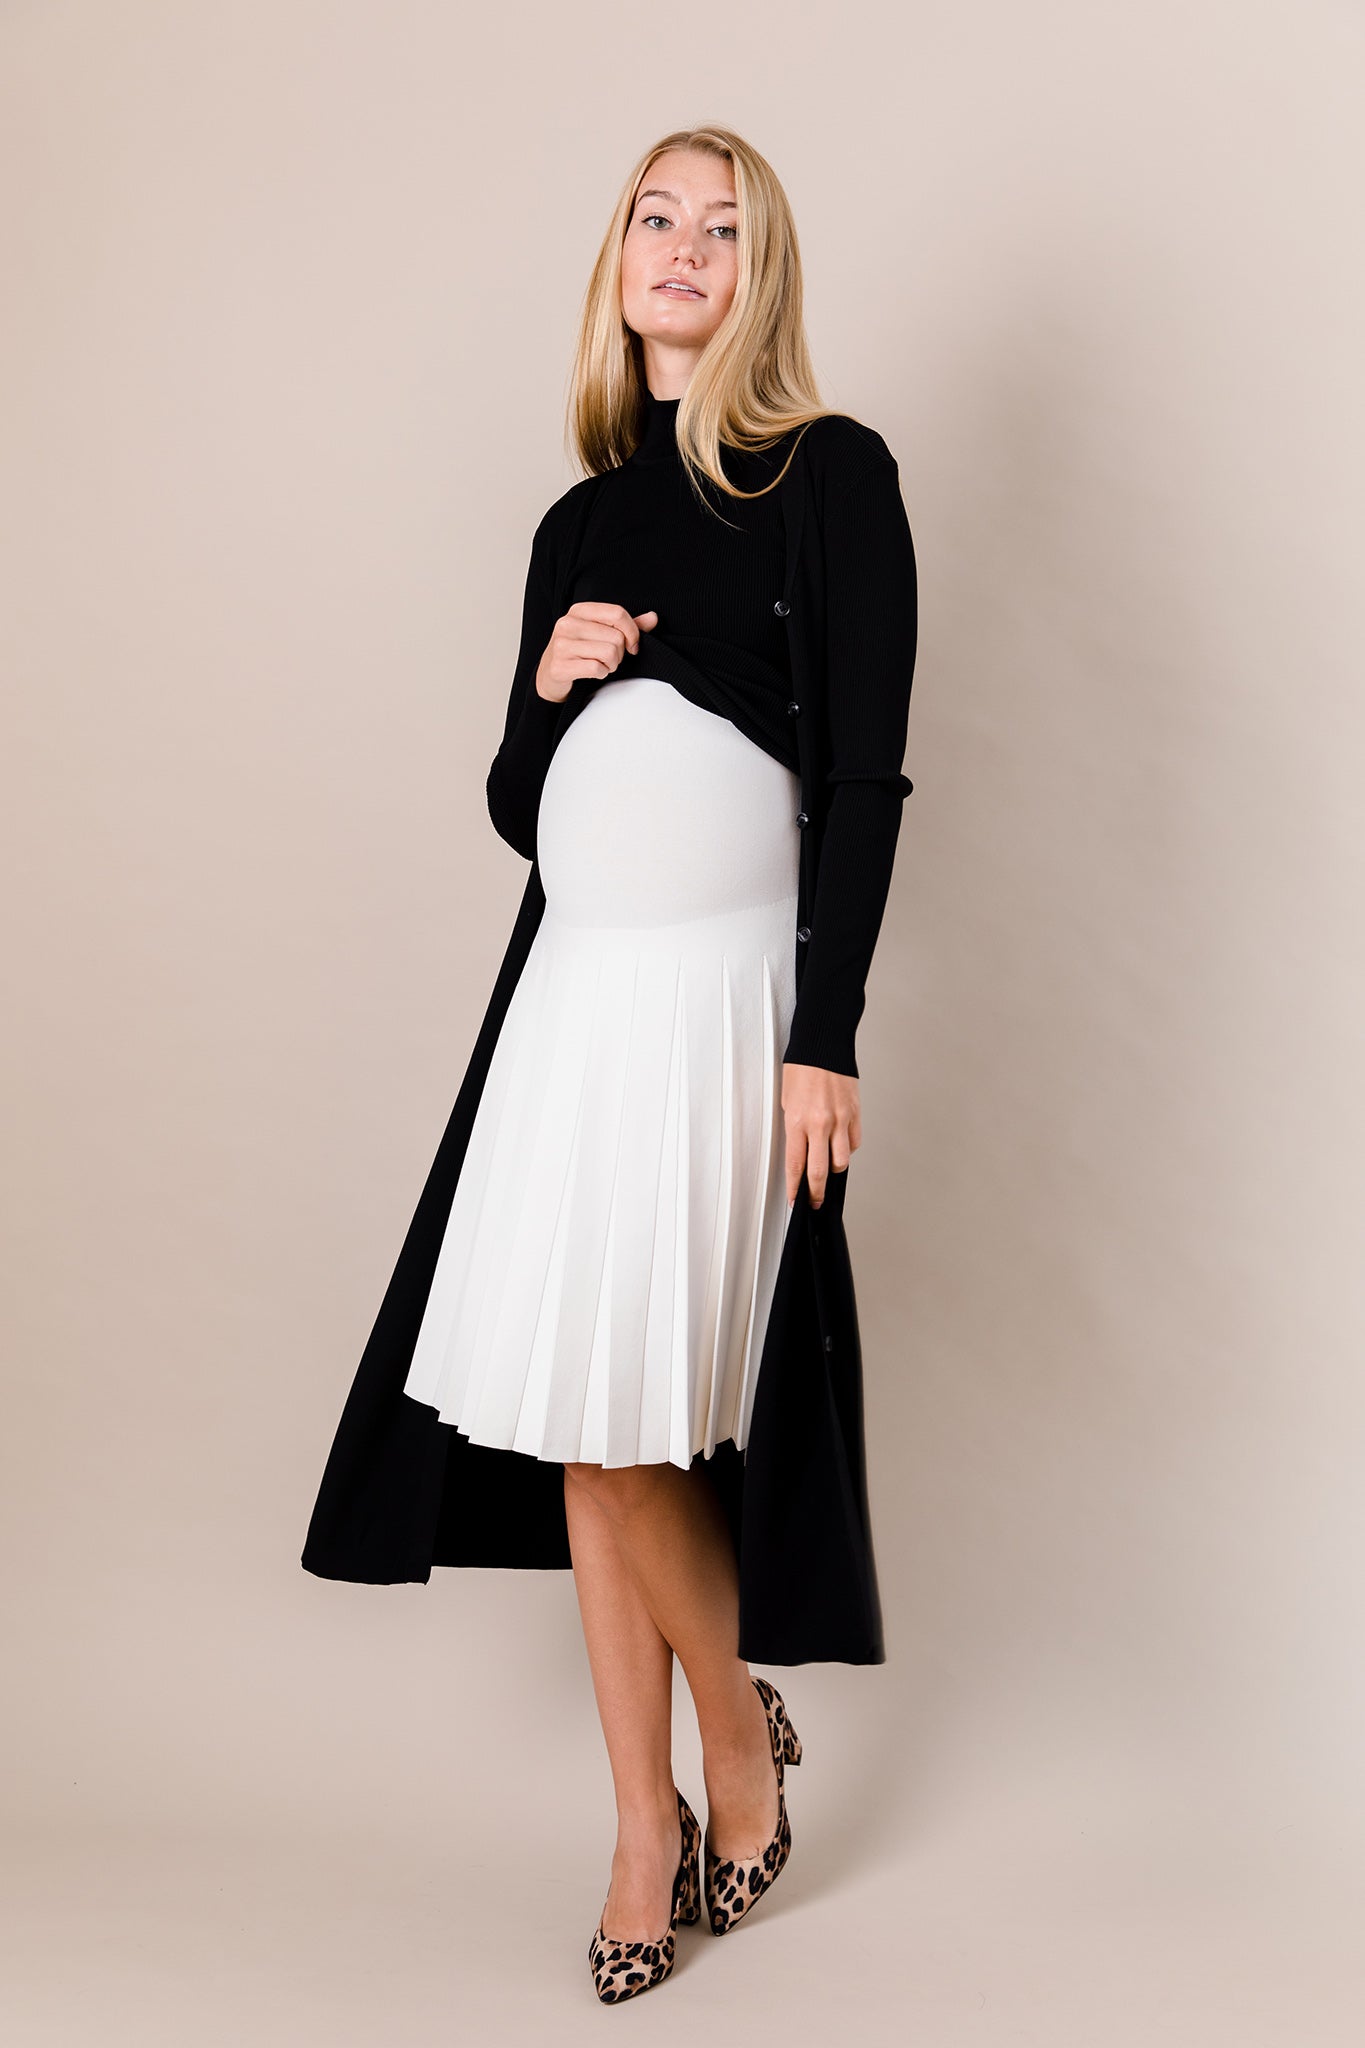 The Maternity Infinity Skirt in Winter ...